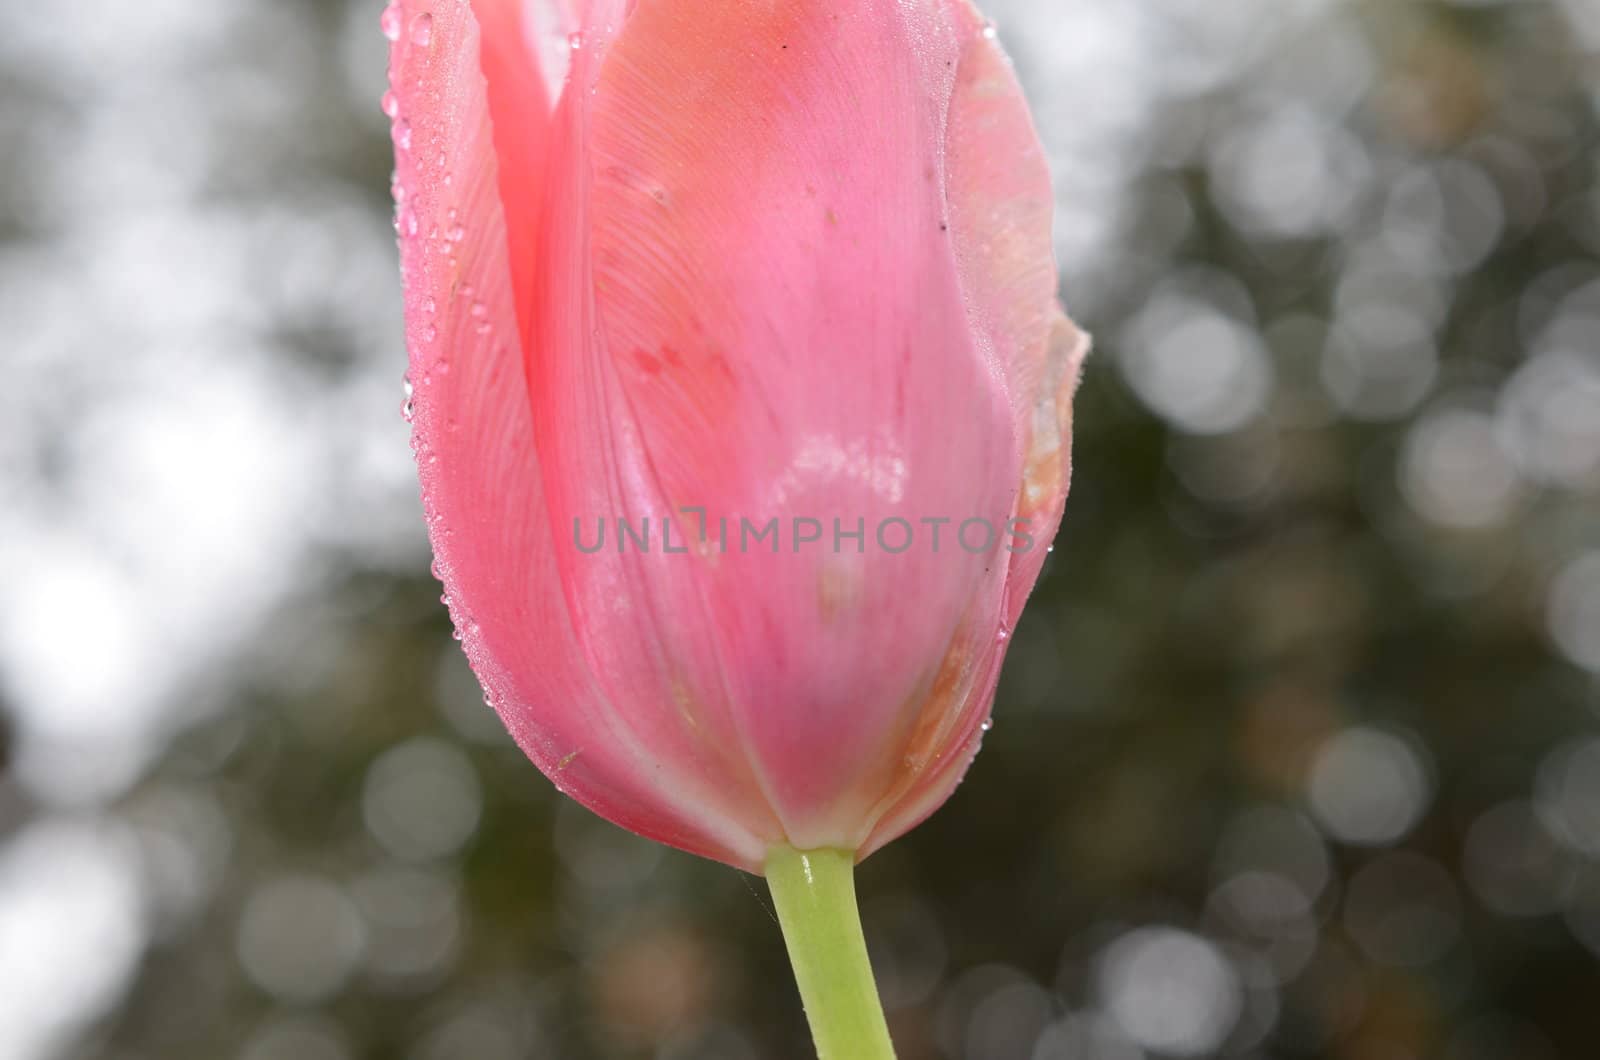 Closeup view of a tulip after a rain storm